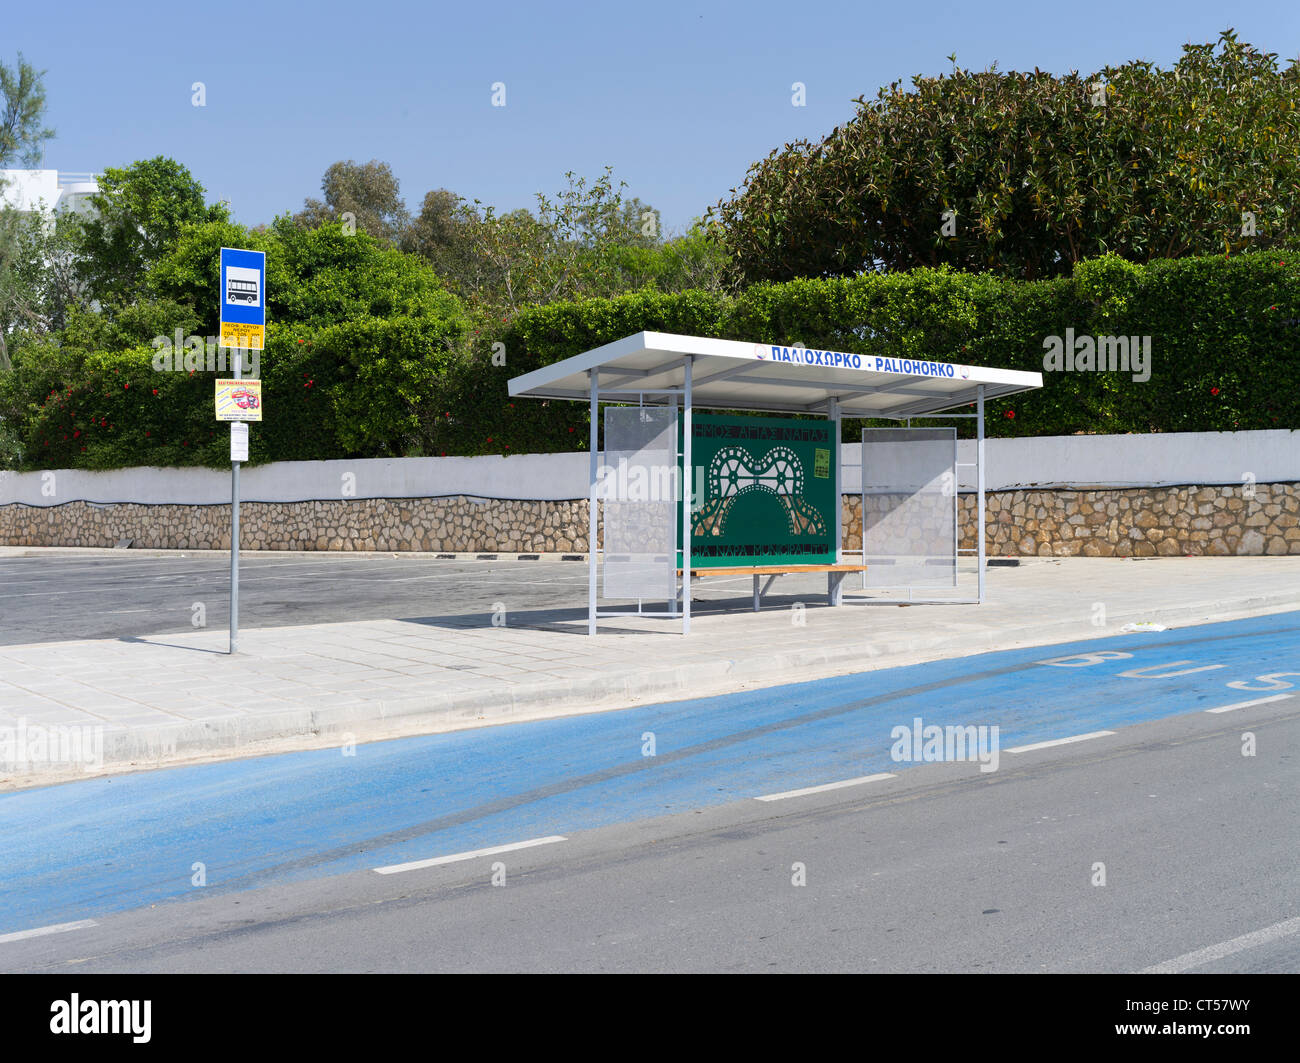 dh AYIA NAPA ZYPERN Zypern Bushaltestelle Schutz griechenland Bushaltestelle im Freien Stockfoto